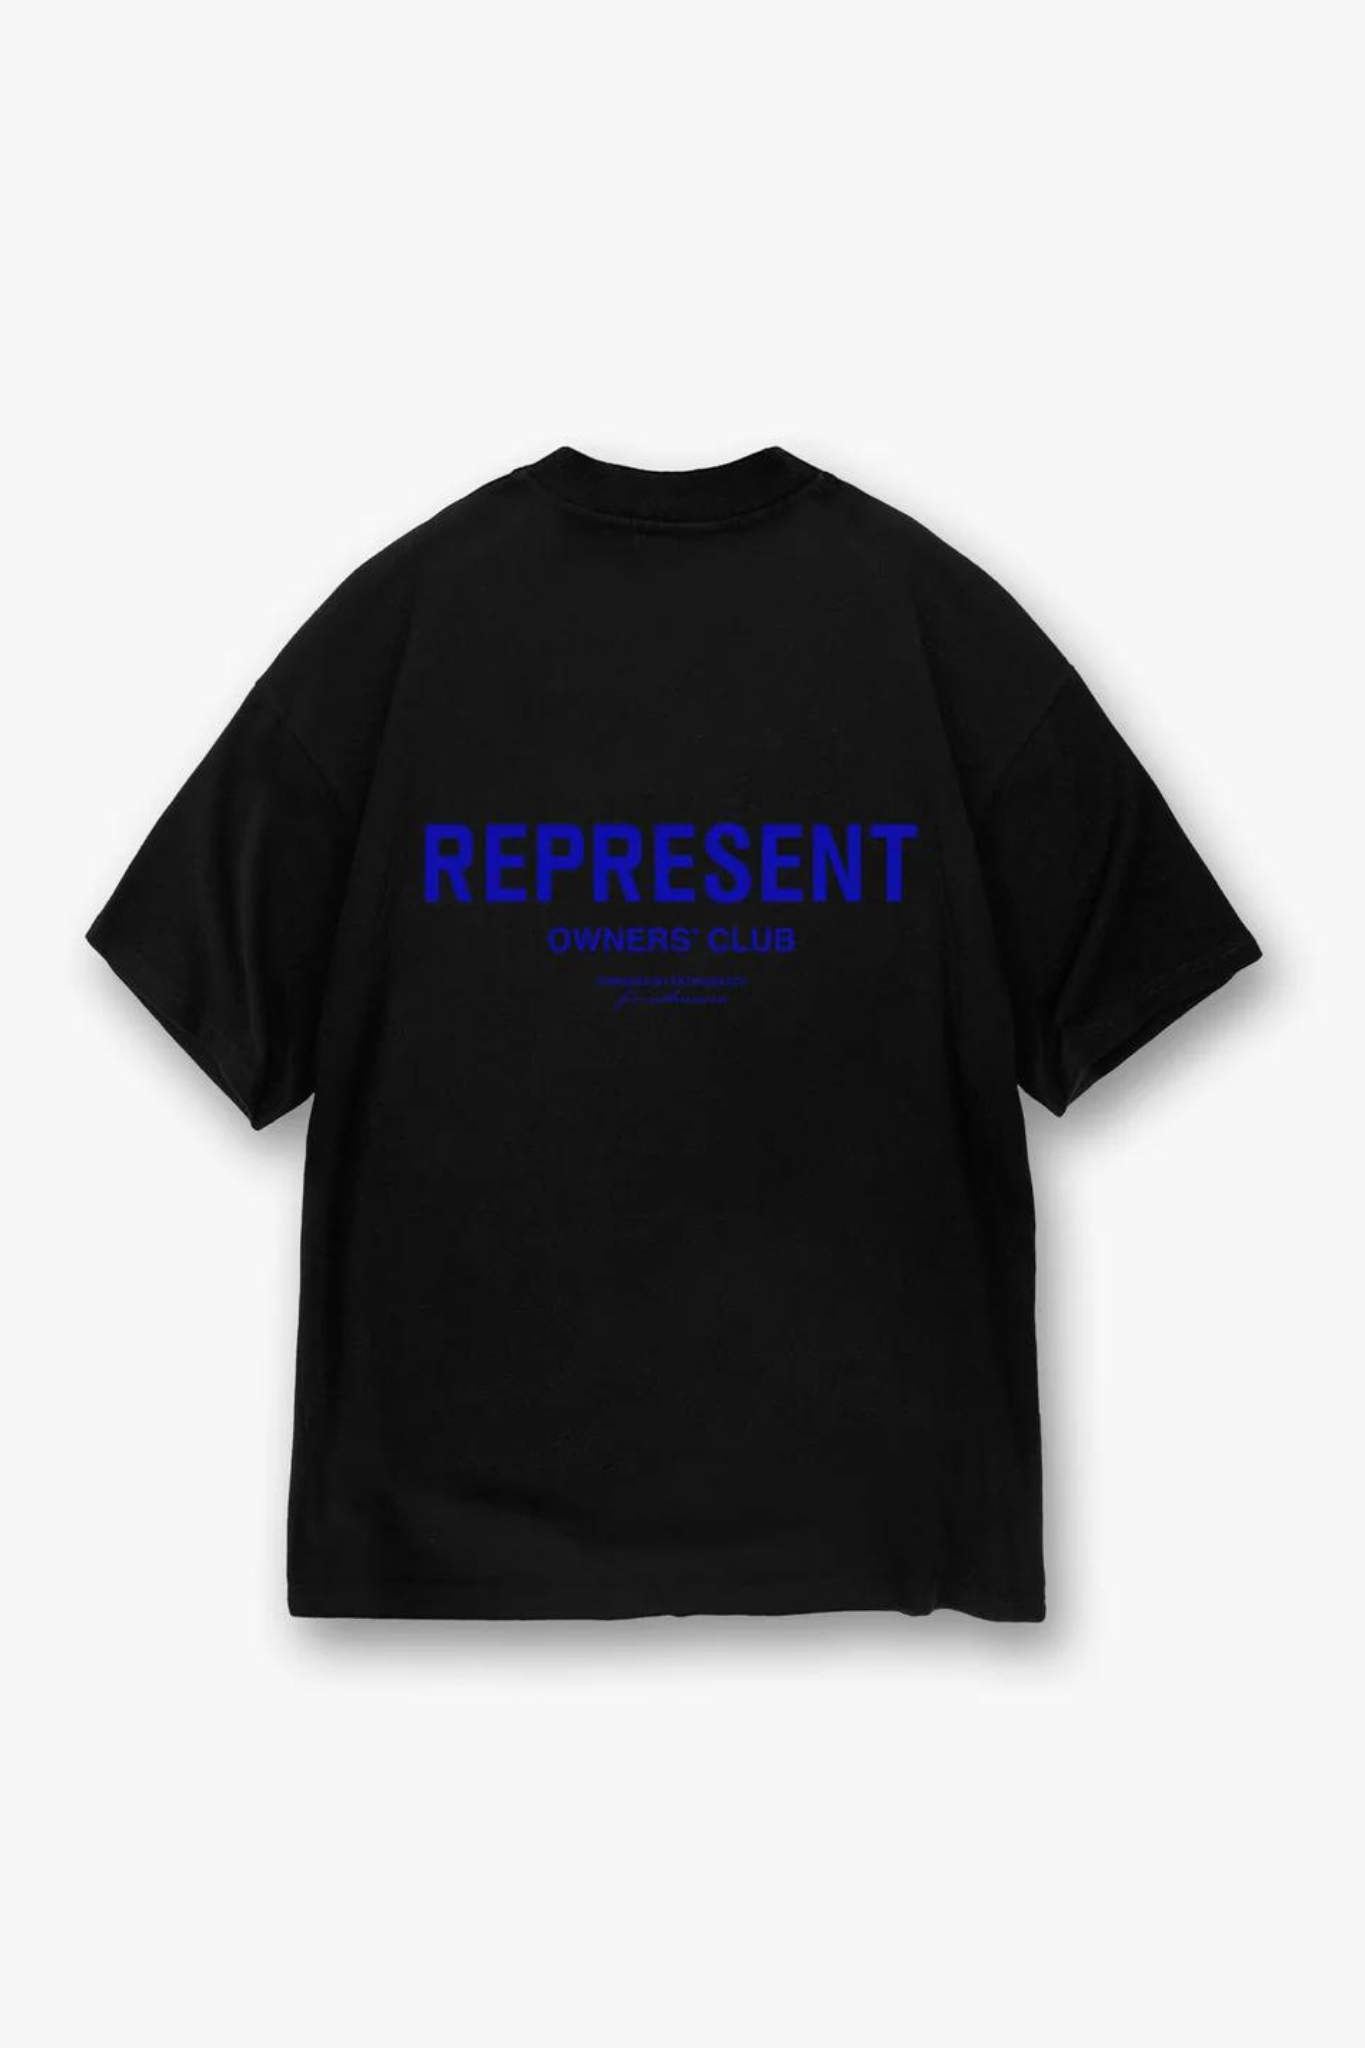 Owners Club T-shirt - Black/ Cobalt-1